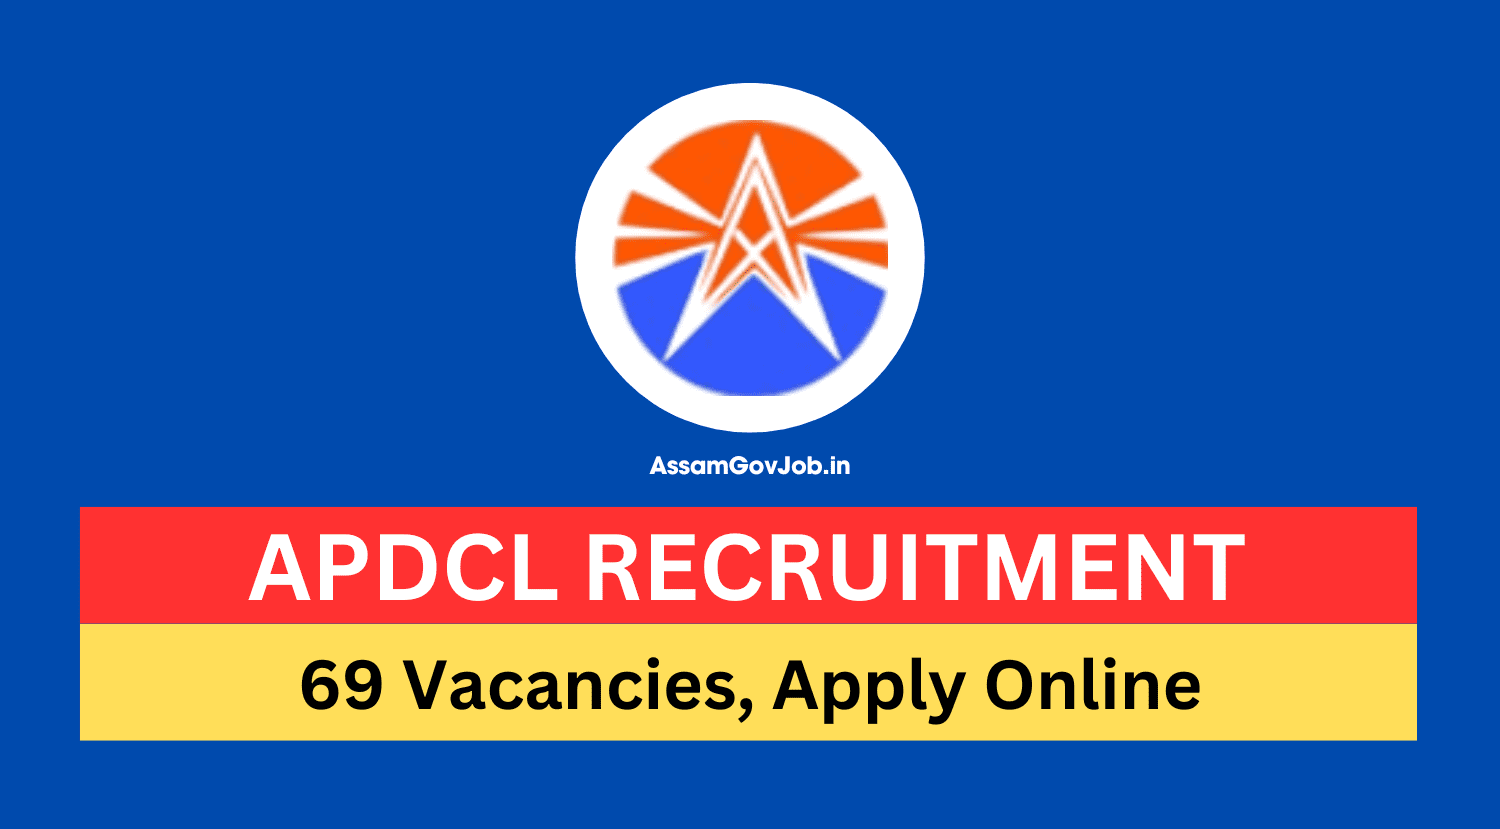 APDCL Recruitment 2024